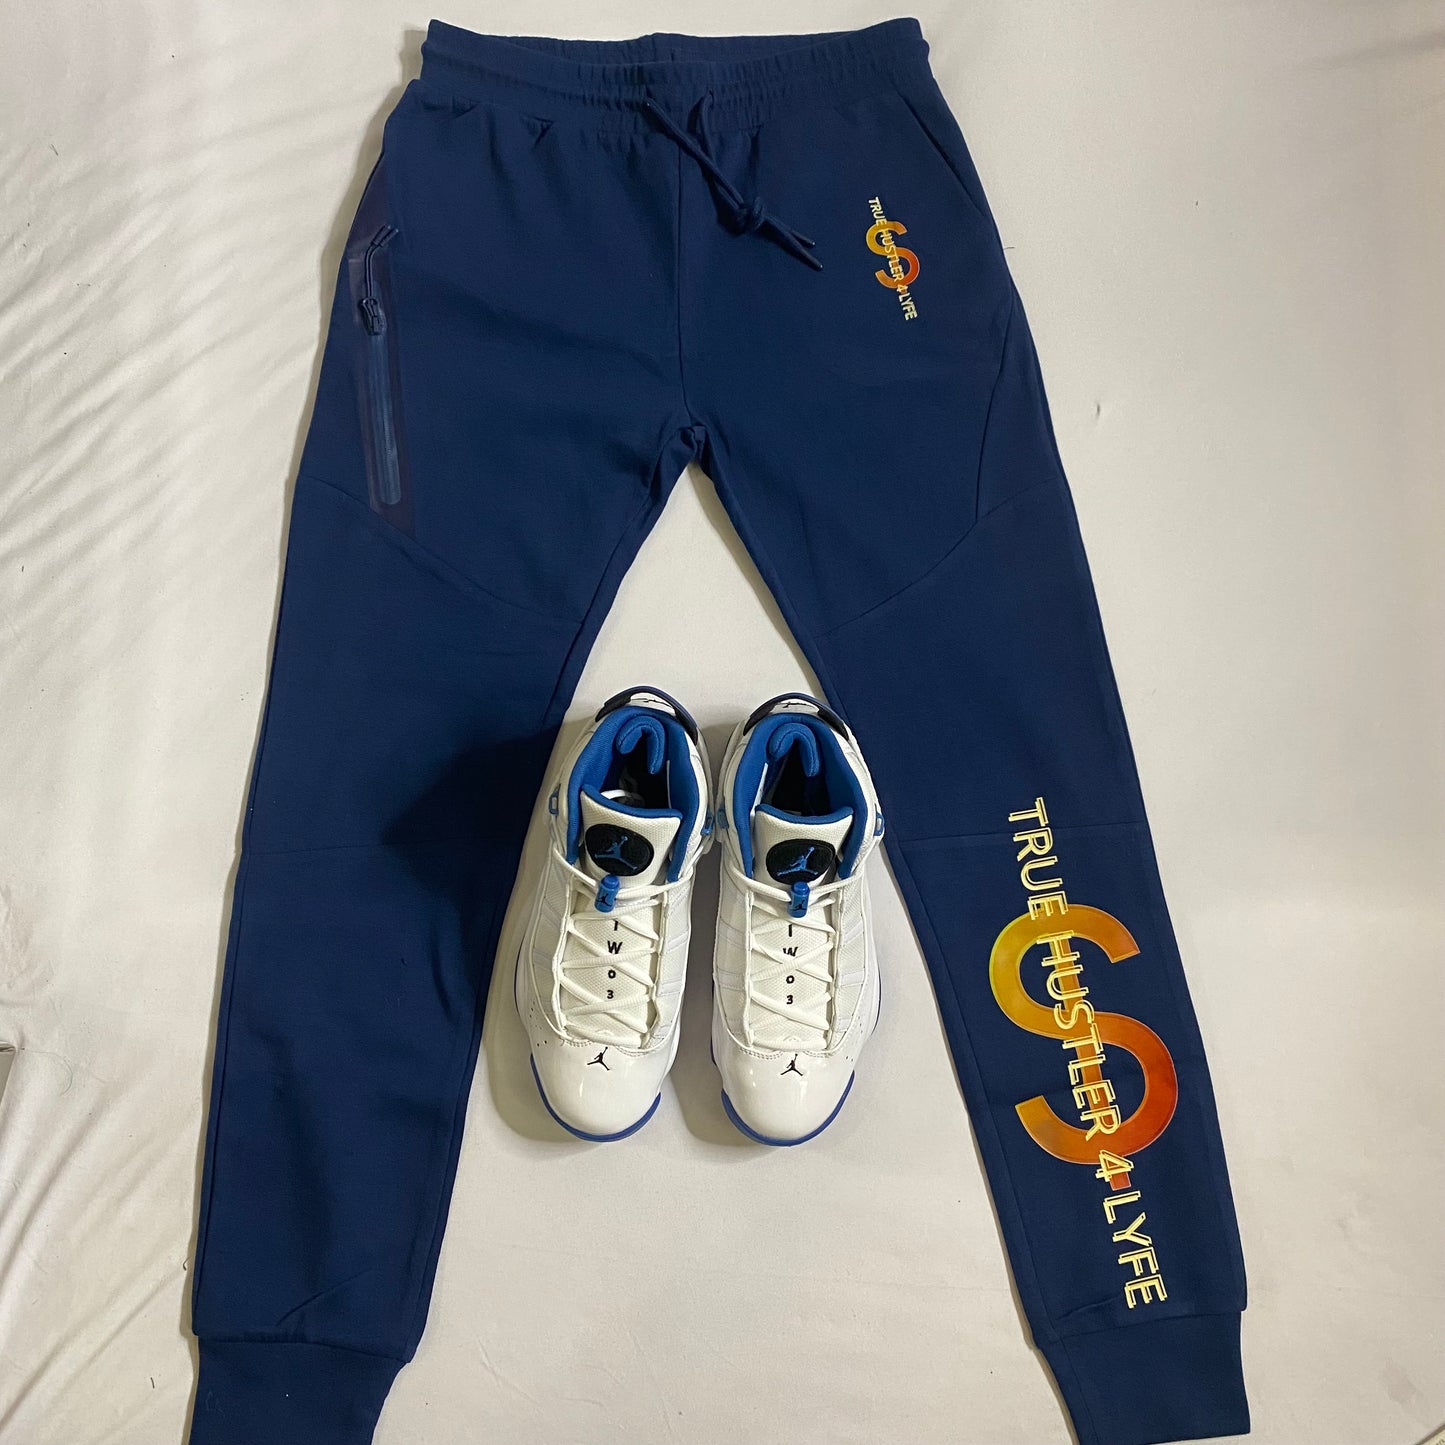 True Hustler 4 Ocean Blue Lyfe Black Tech 2 Piece Jogging Suit (unisex)